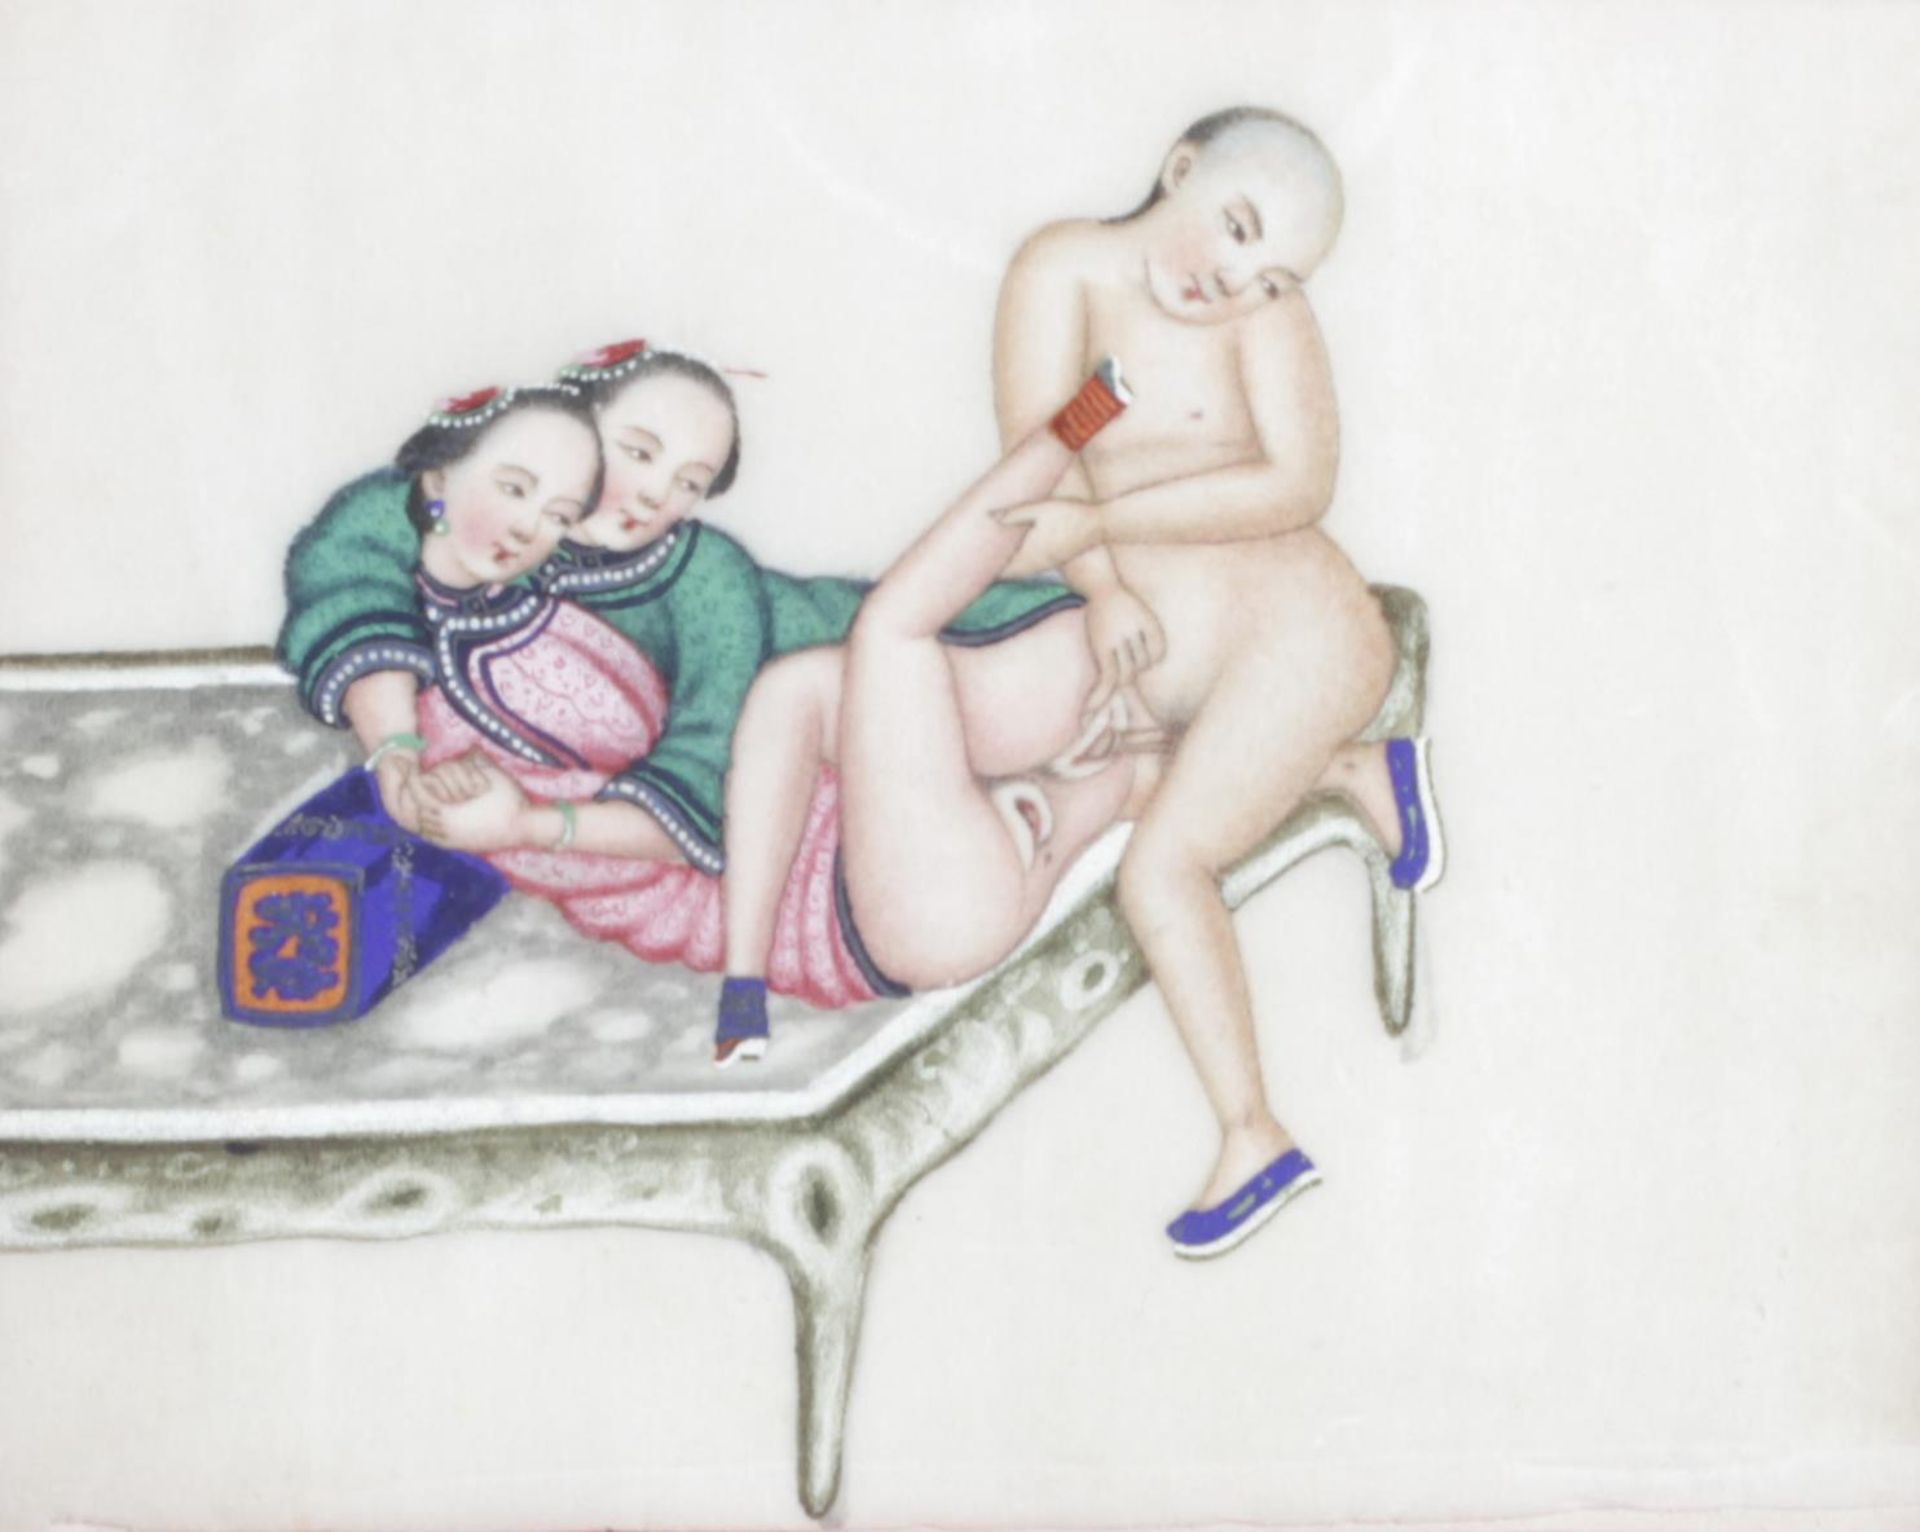 Five 19th century Oriental paintings on rice paper, depicting erotic scenes.